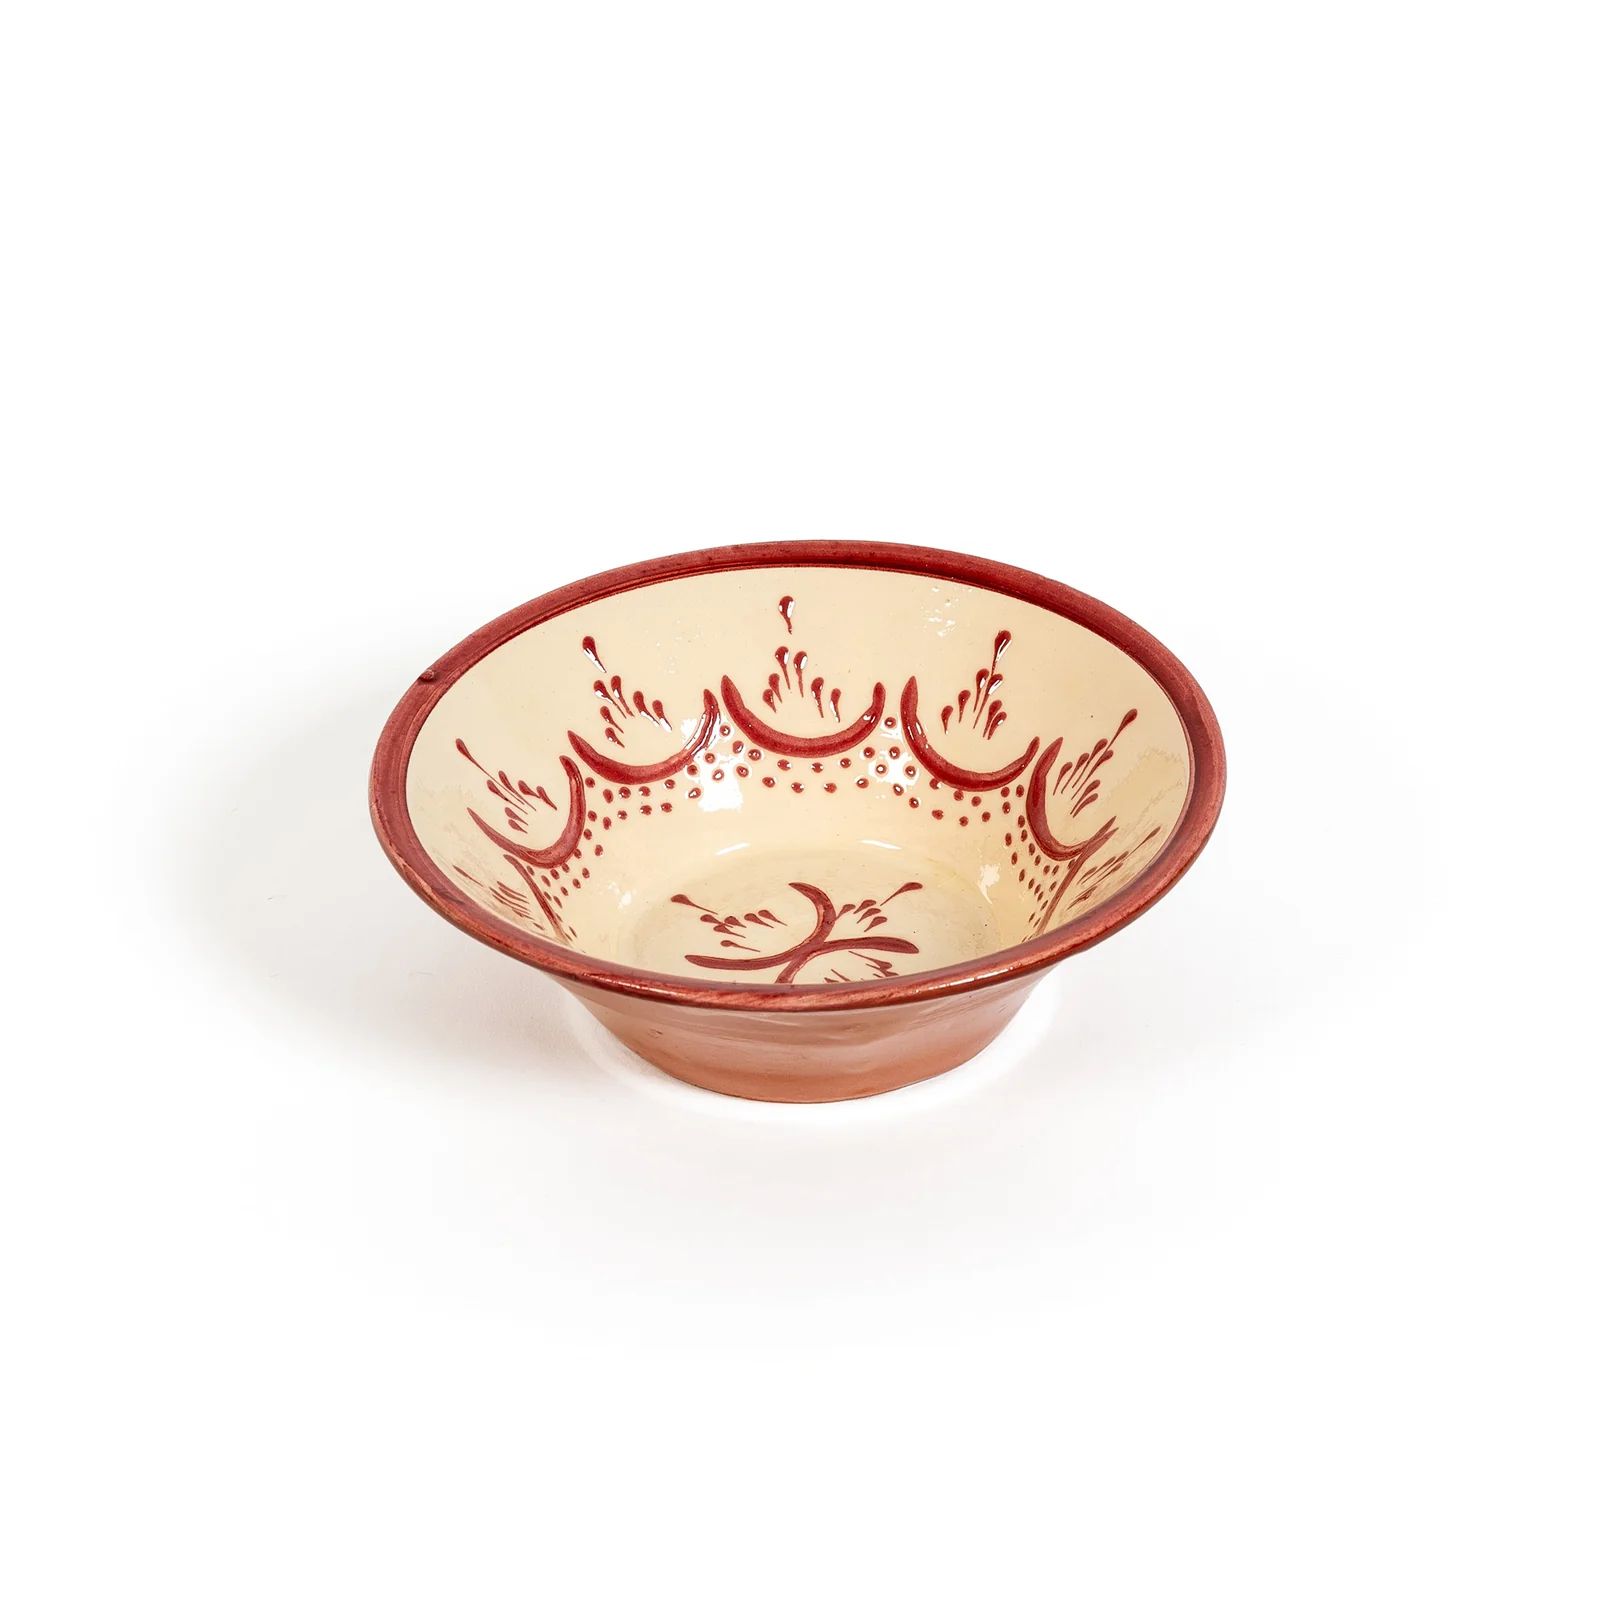 Pintora small bowl | Sharland England